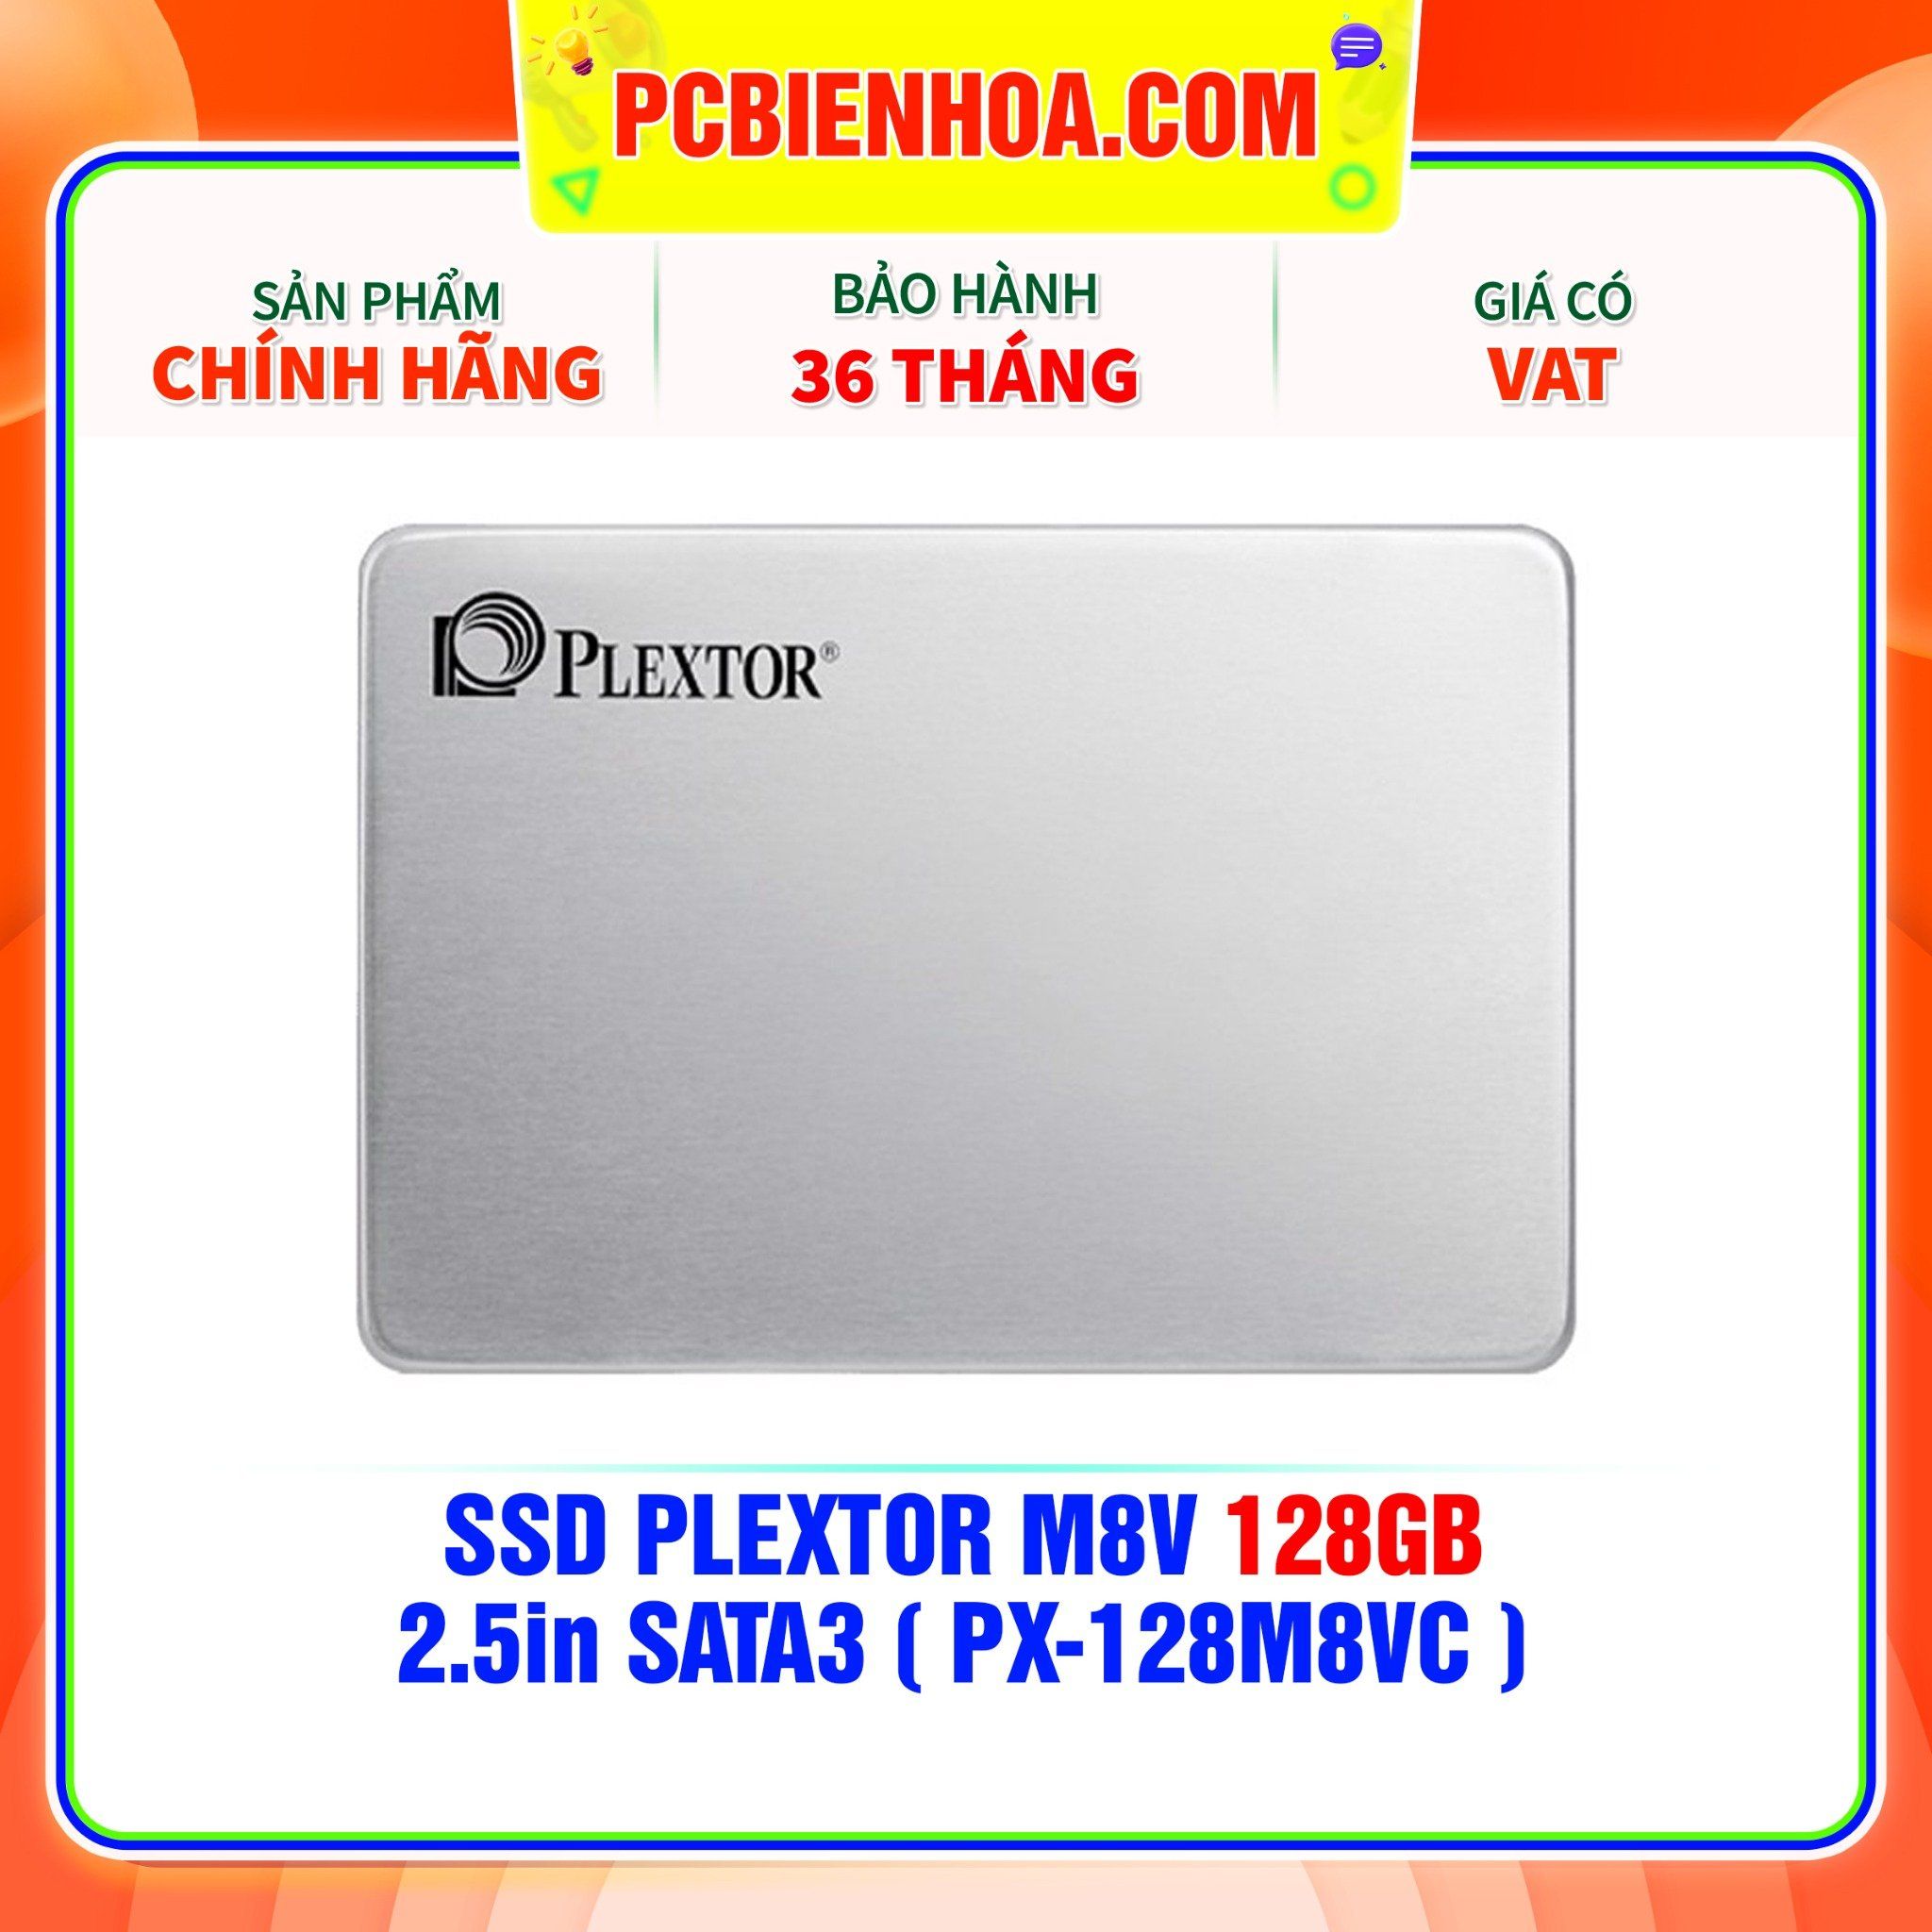  SSD PLEXTOR M8V 128GB - 2.5in SATA3 ( PX-128M8VC ) 